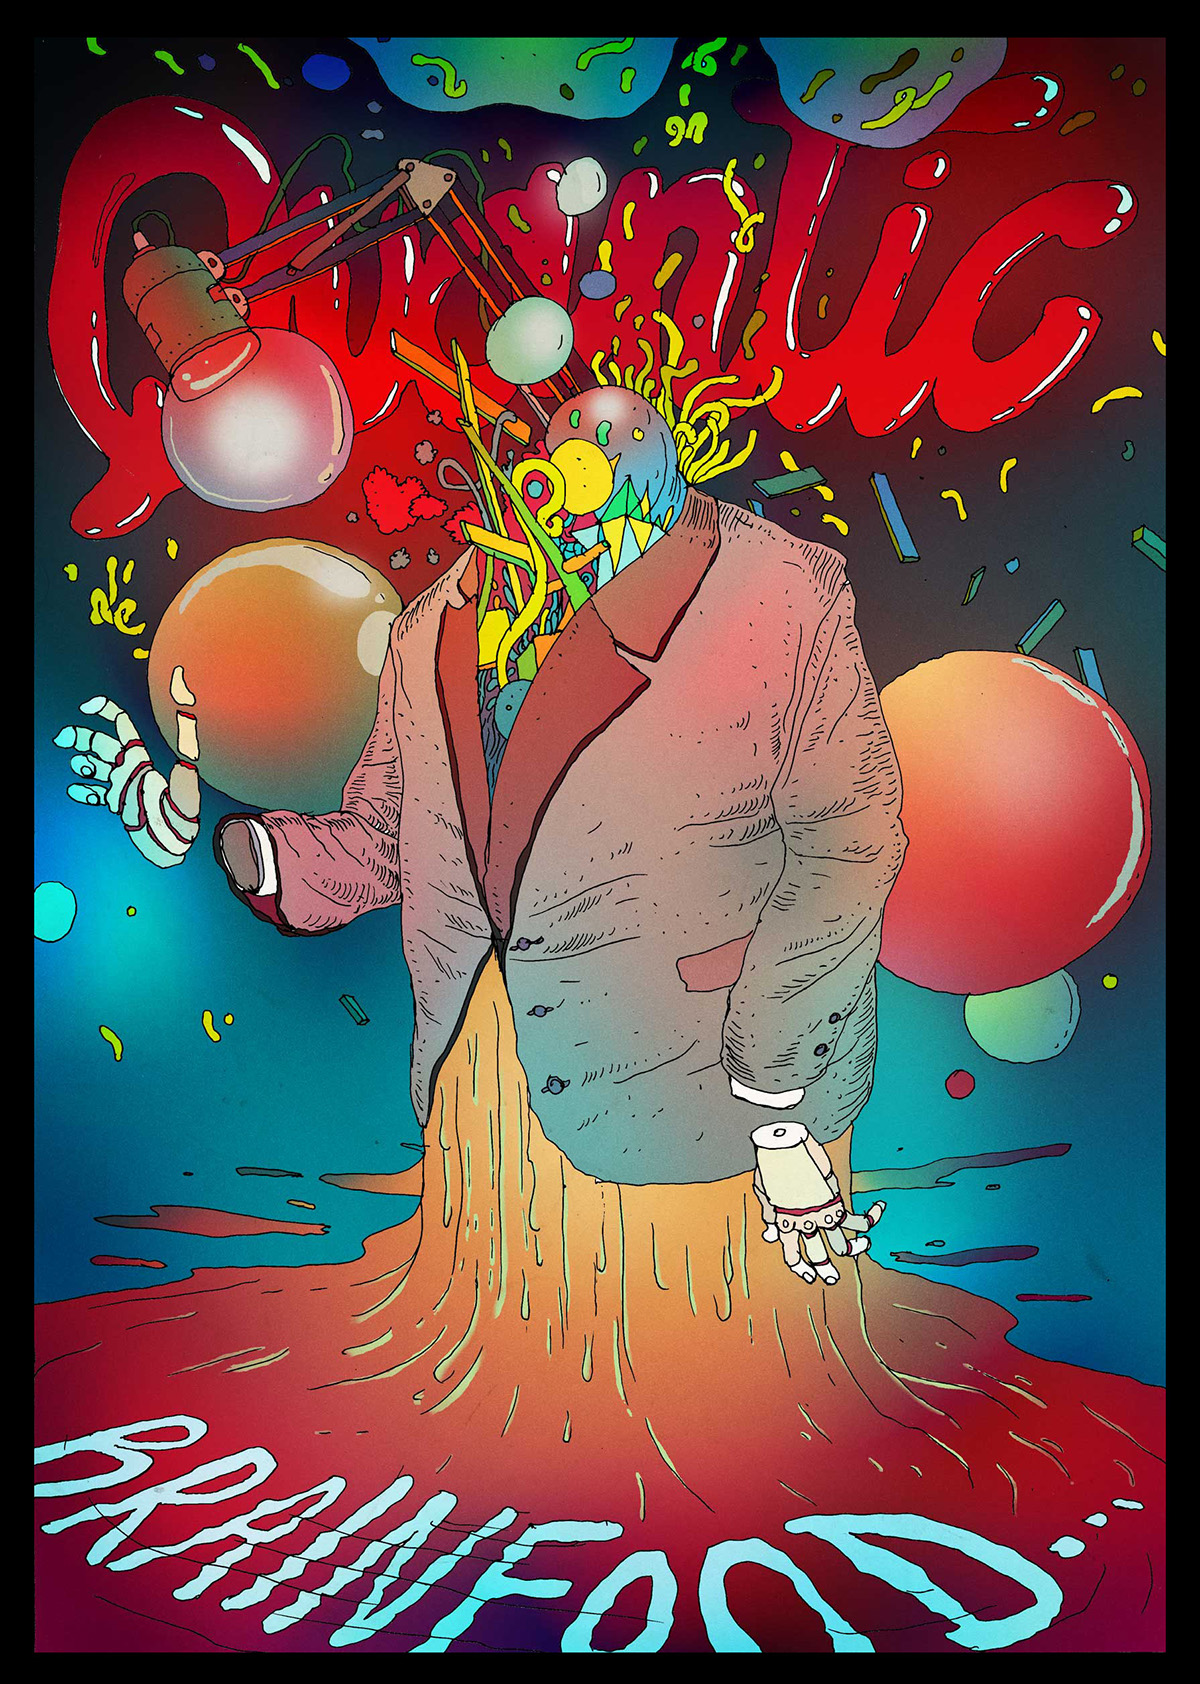 Philip K. Dick videogame French Indie game psychedelic surreal world mind Darjeeling arte Nova ilustracion dibujo olivier bonhomme science fiction